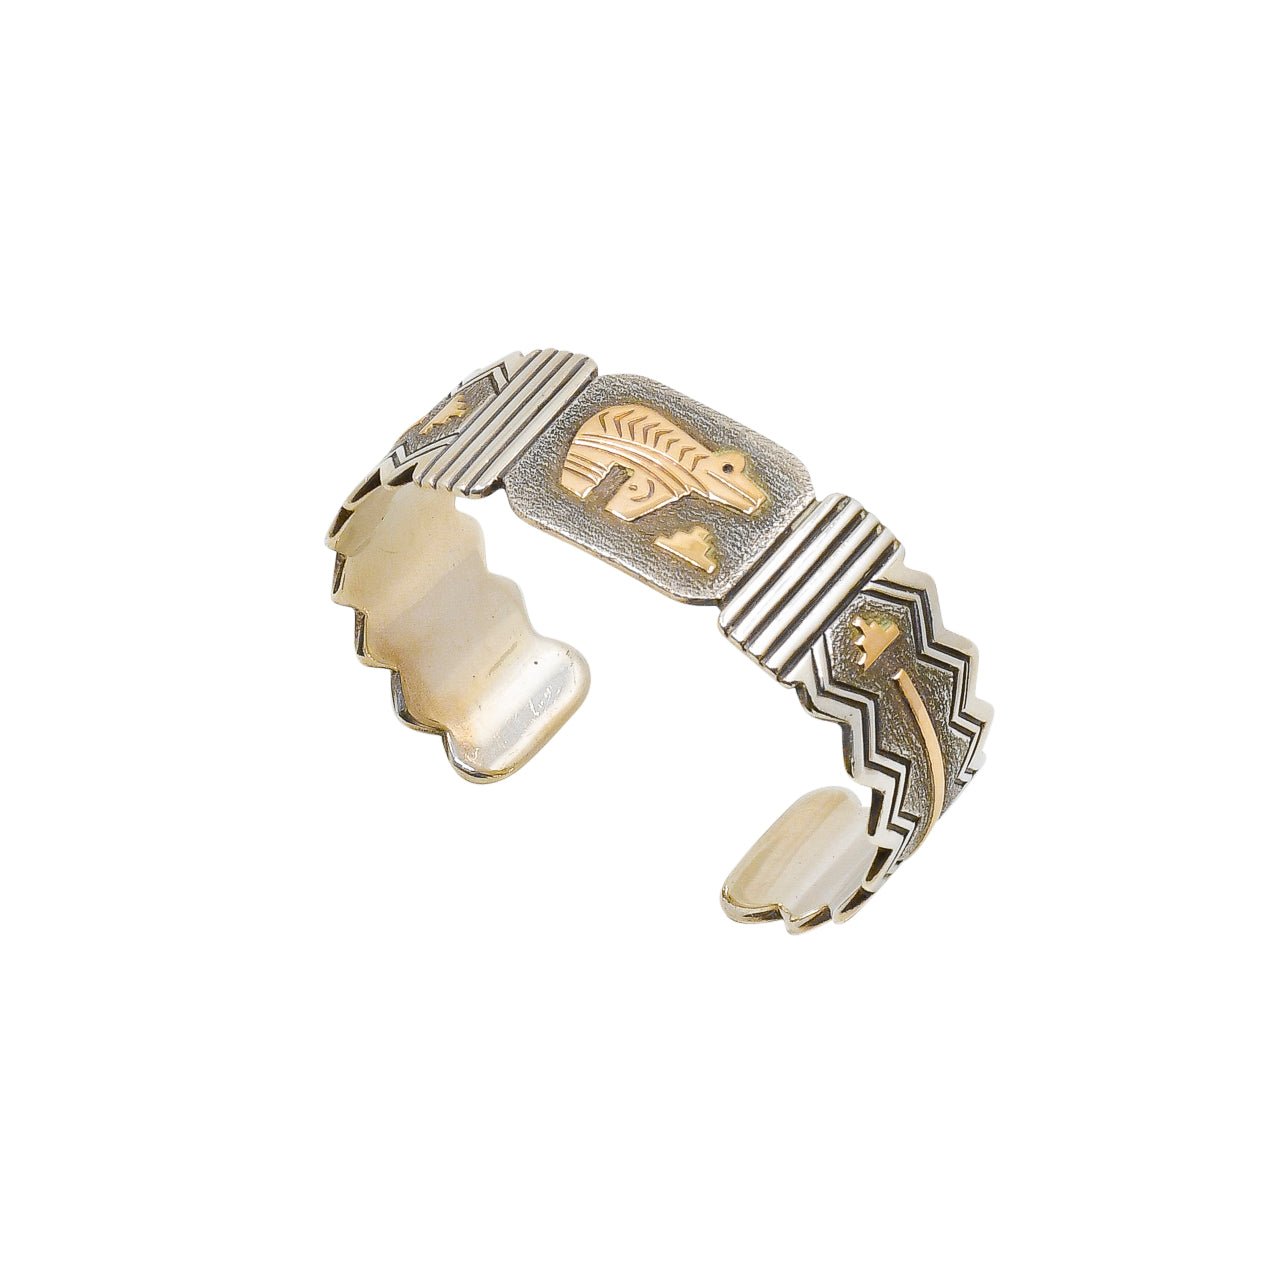 Jack Tom Spirit Bear Bracelet of Silver and 14kt Gold - Turquoise & Tufa